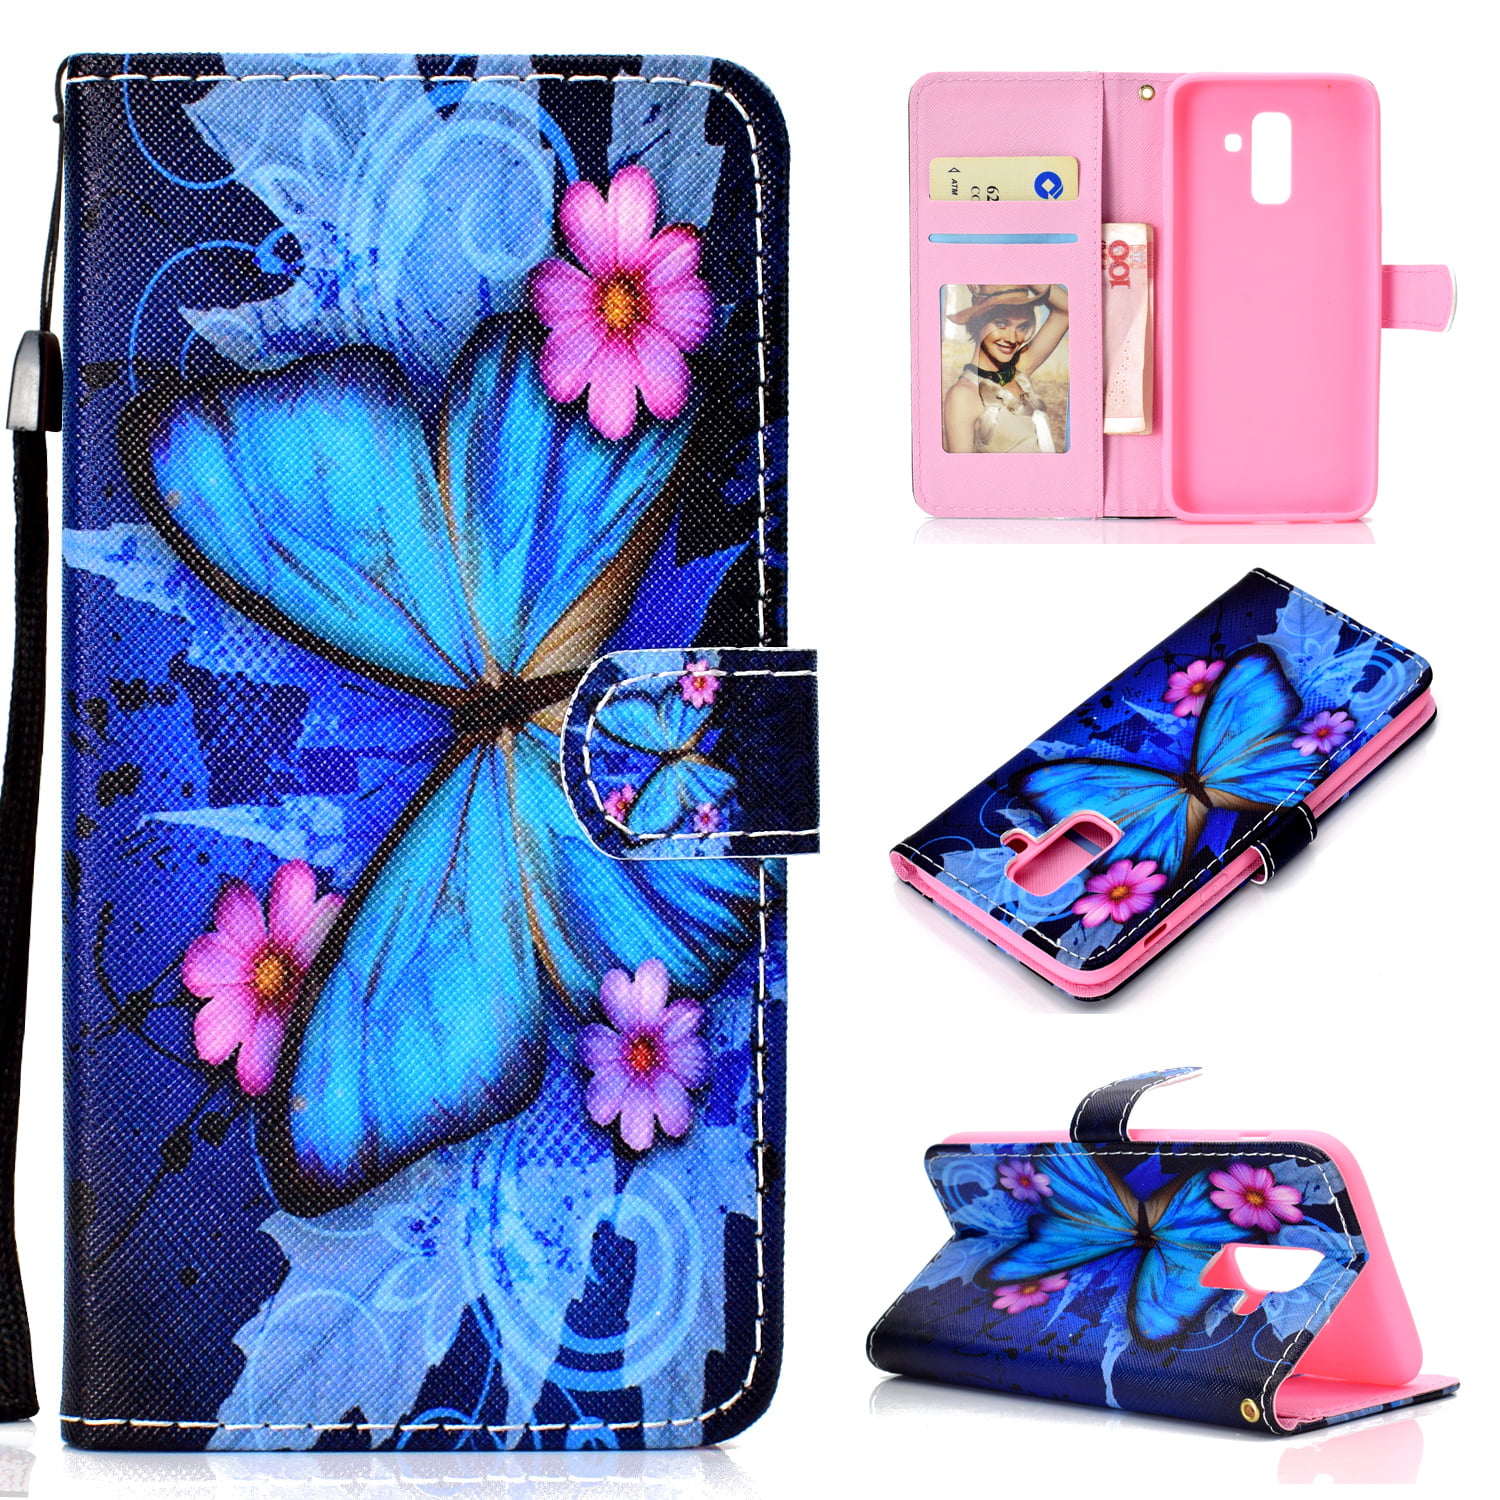 Samsung Galaxy A8 2018 Wallet Case Samsung Galaxy A8 2018 Case for Women Fashion Butterfly Printing PU Leather Wrist Strap Flip Case Cover for Samsung Galaxy A8 2018 Brown, Galaxy A8 2018